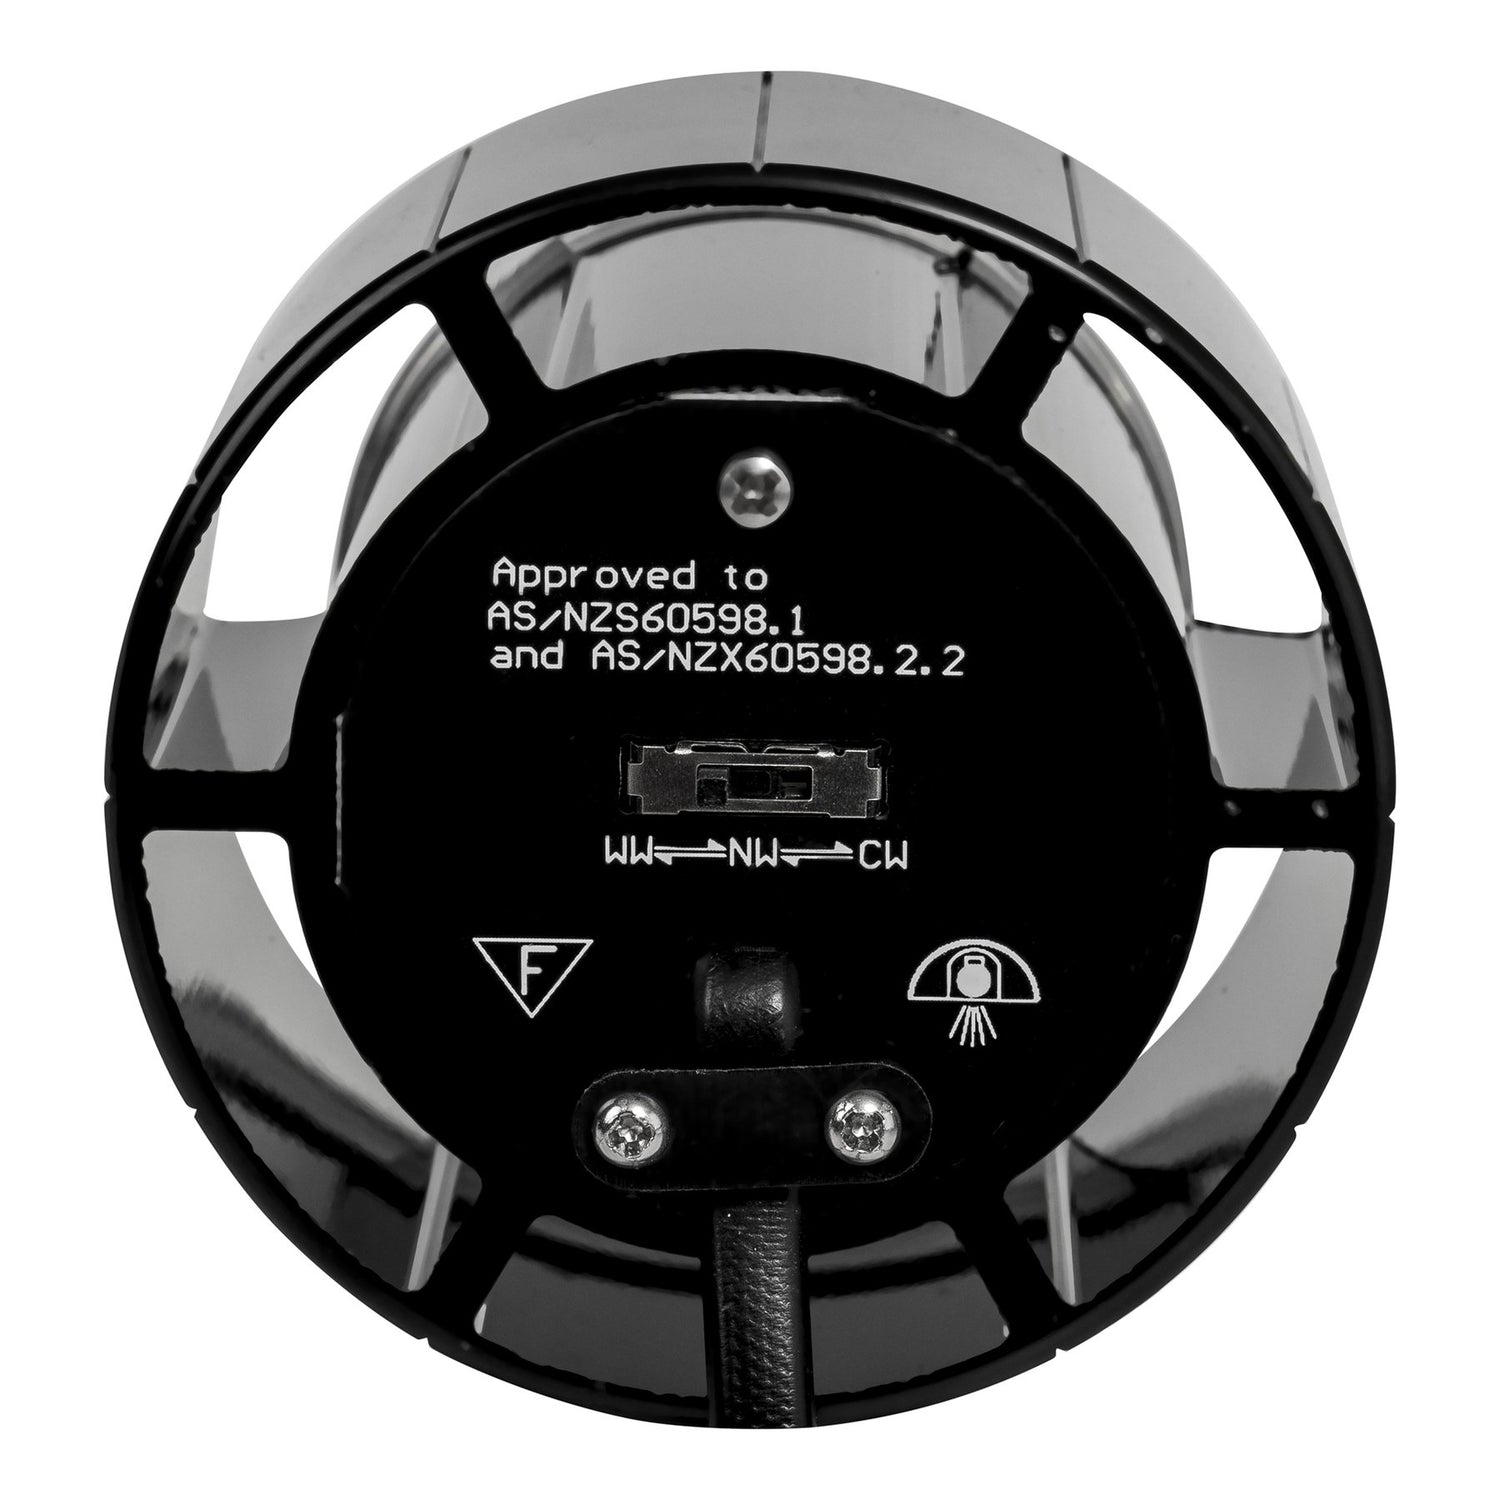 Prime 12w 90mm Gimbal Flush Recessed LED Downlight Black